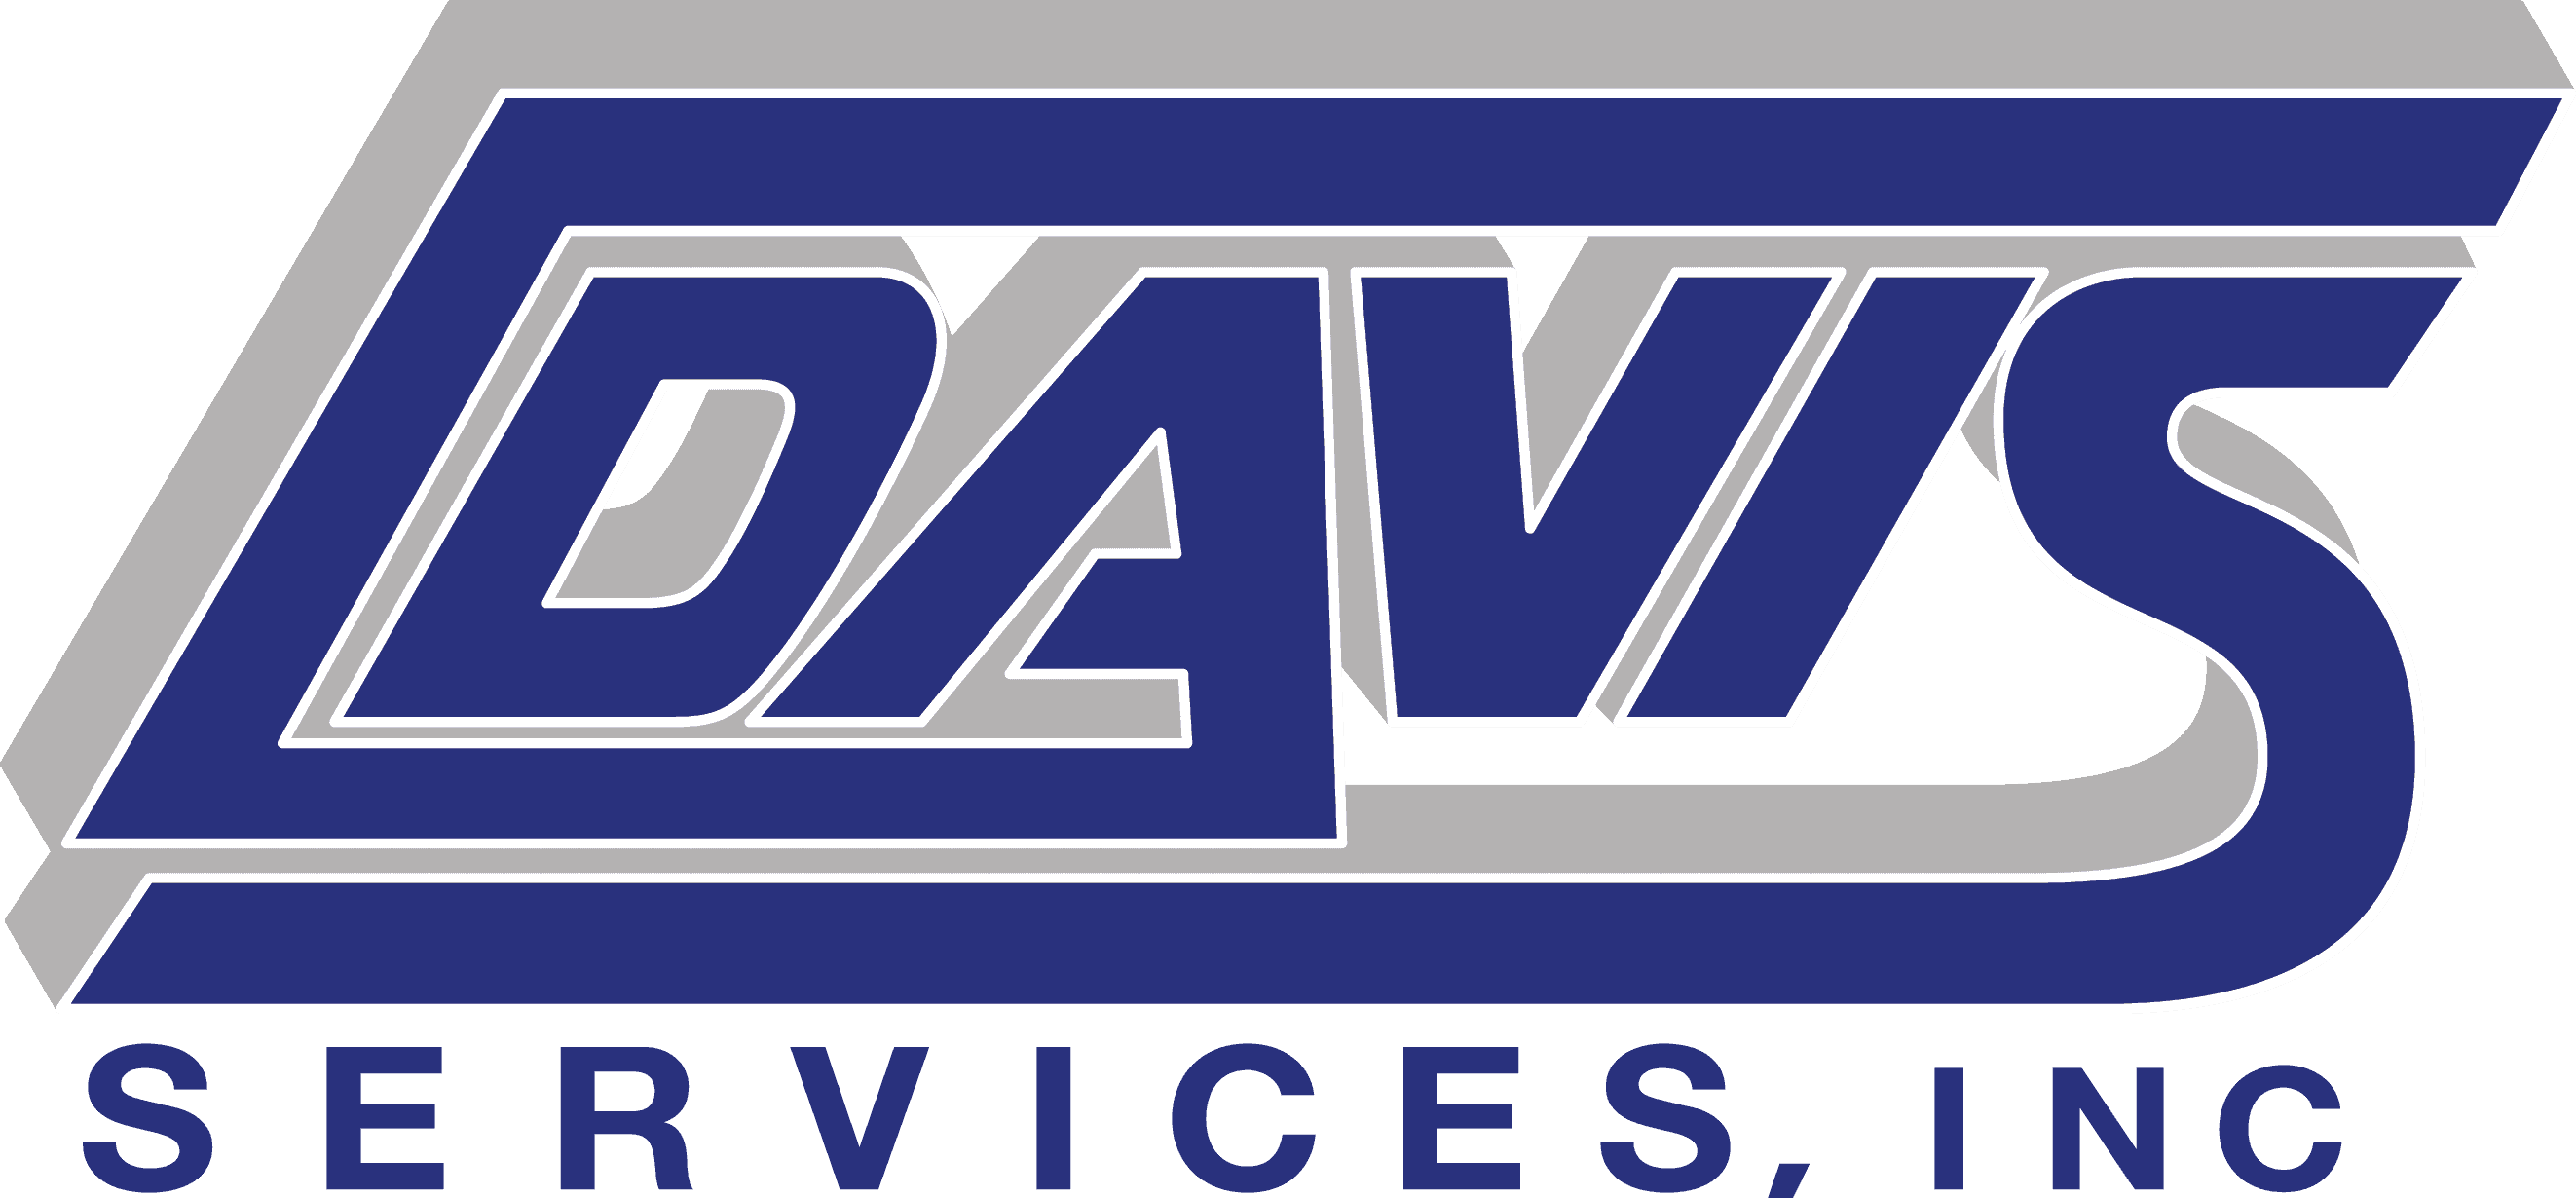 Davis Services, Inc.